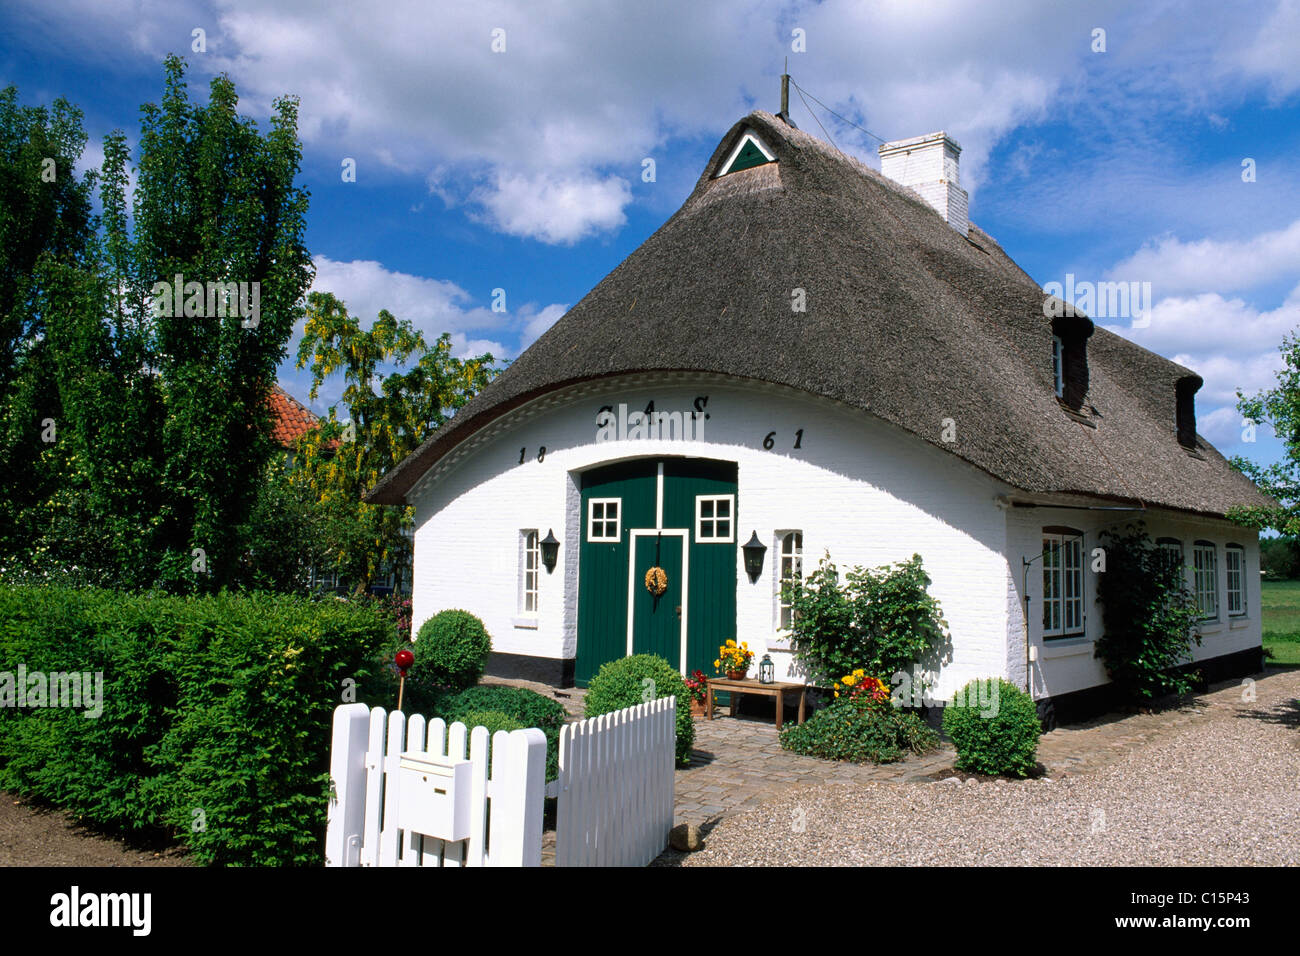 Toit de chaume, de chaume, maison Sieseby, Schlei, Schleswig-Holstein, Allemagne, Europe Banque D'Images